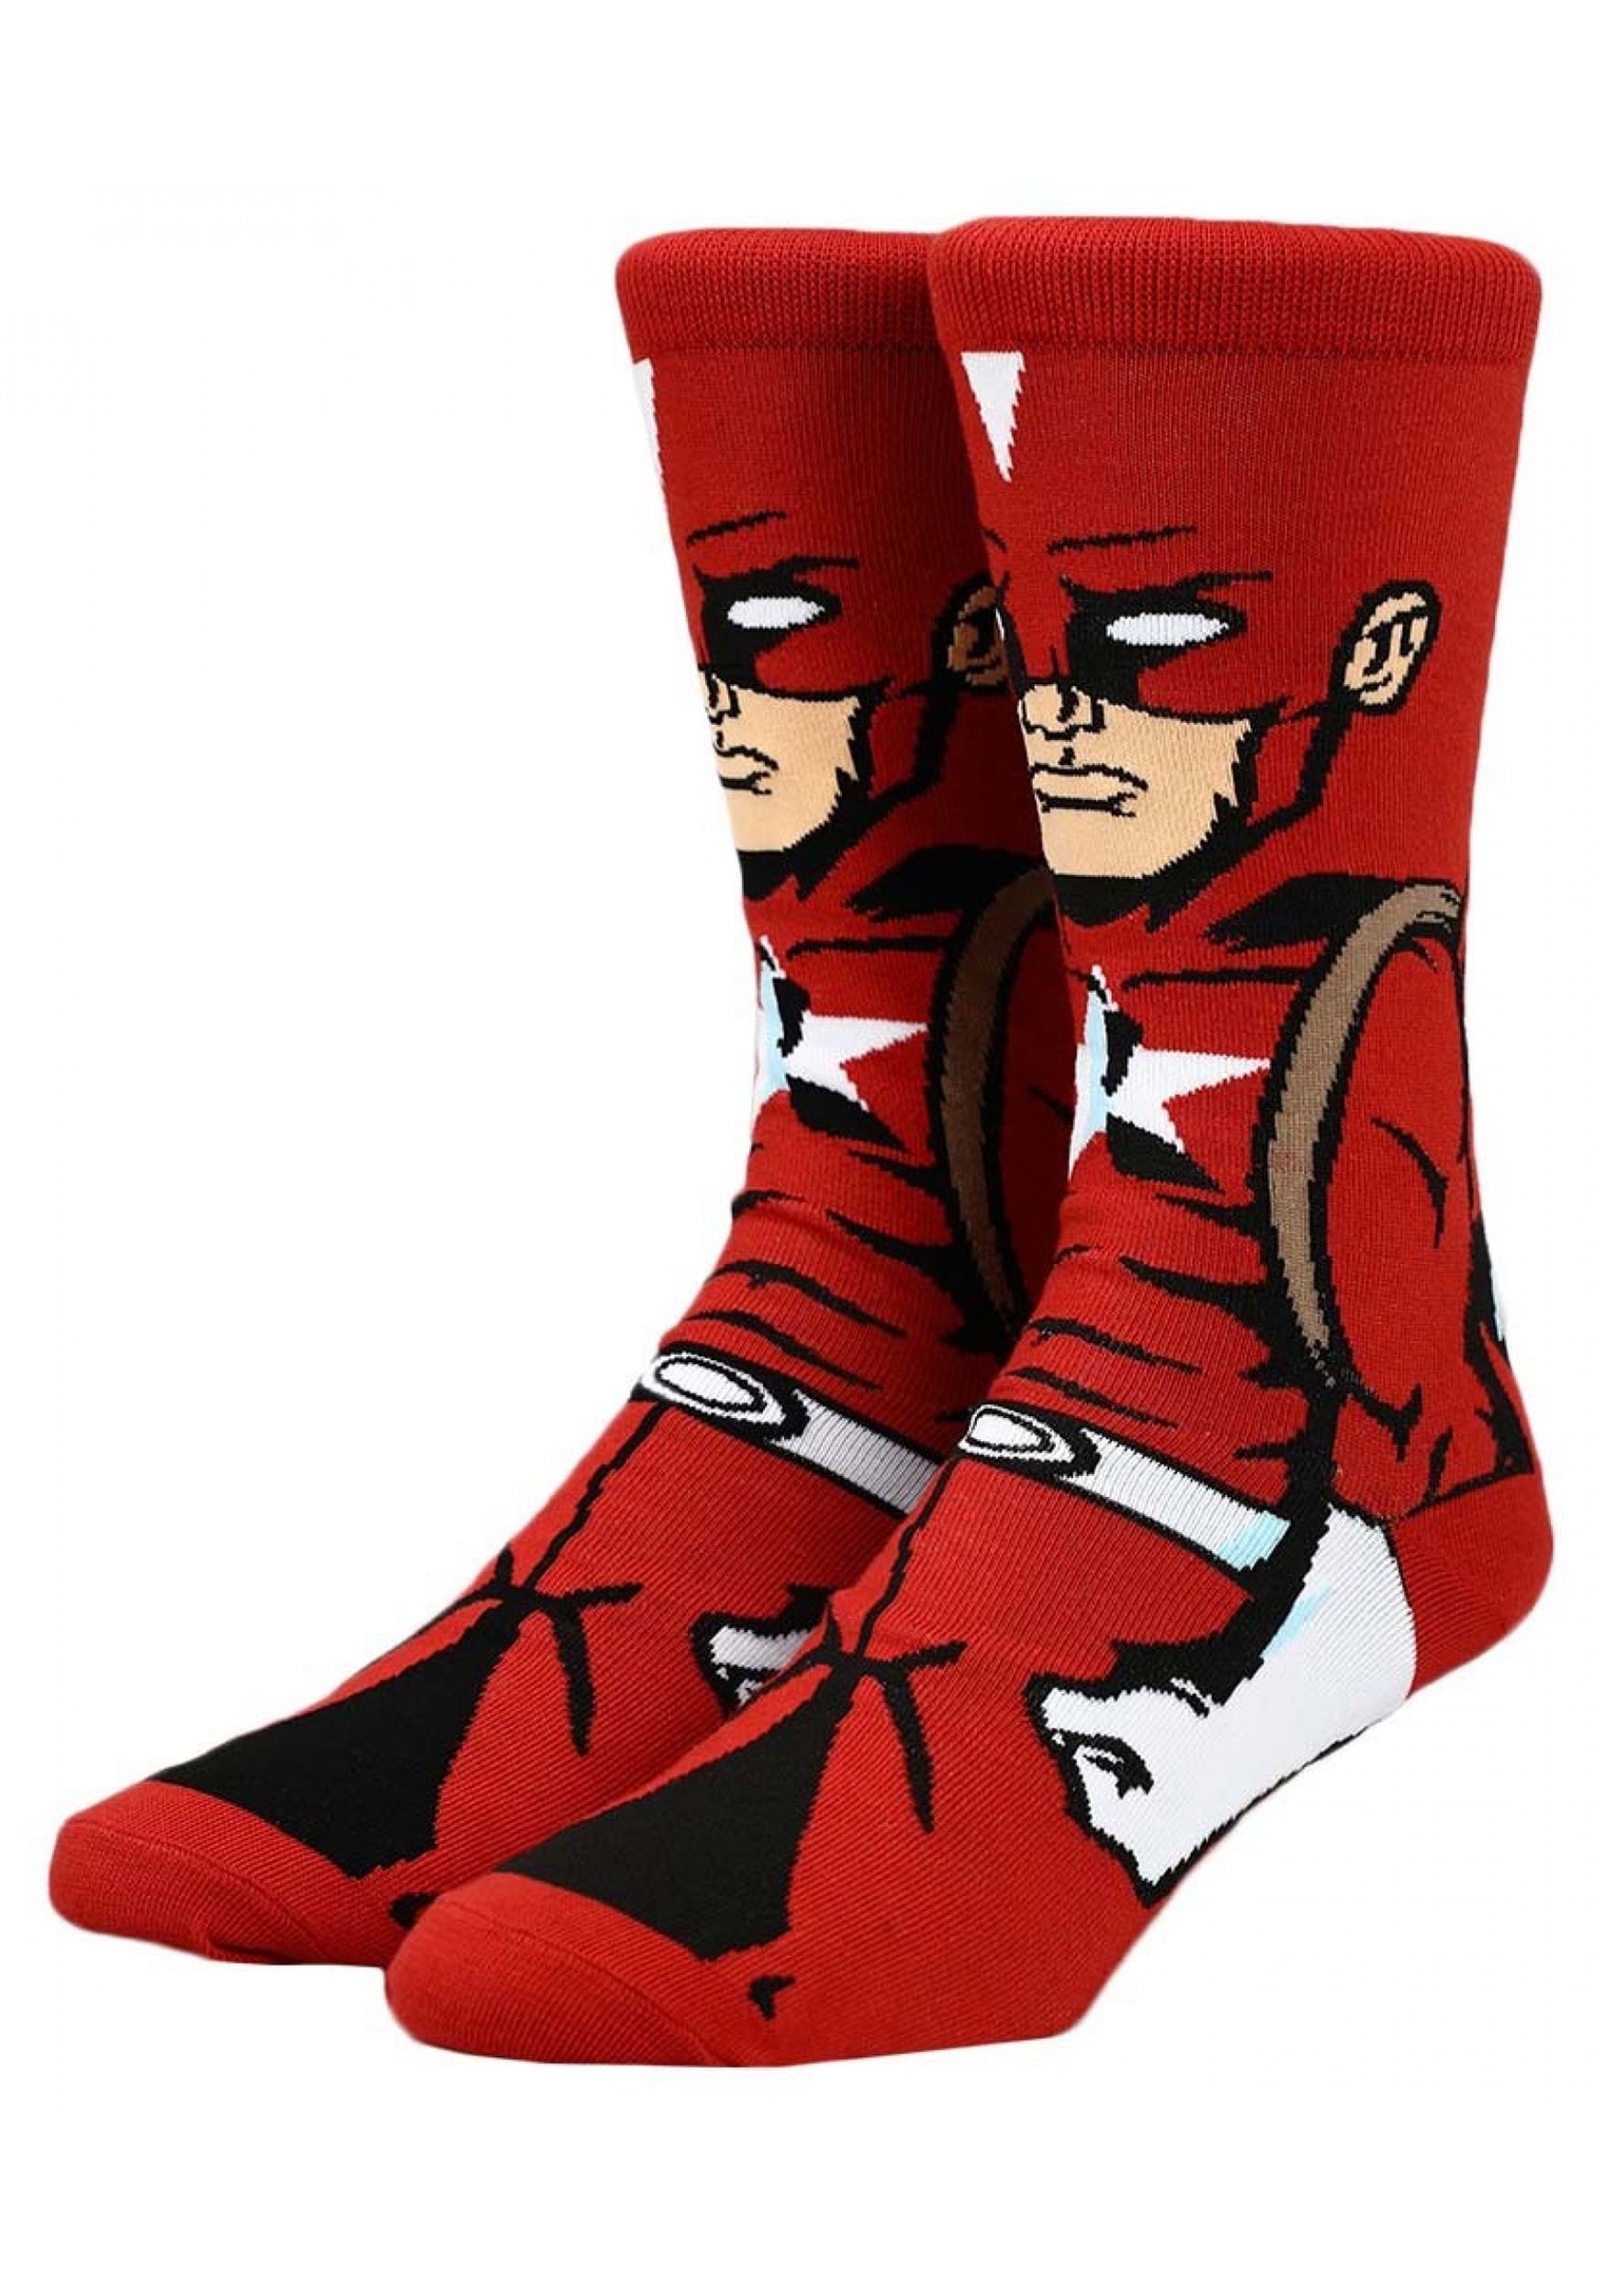 Black Widow Red Guardian Marvel 360 Character Socks